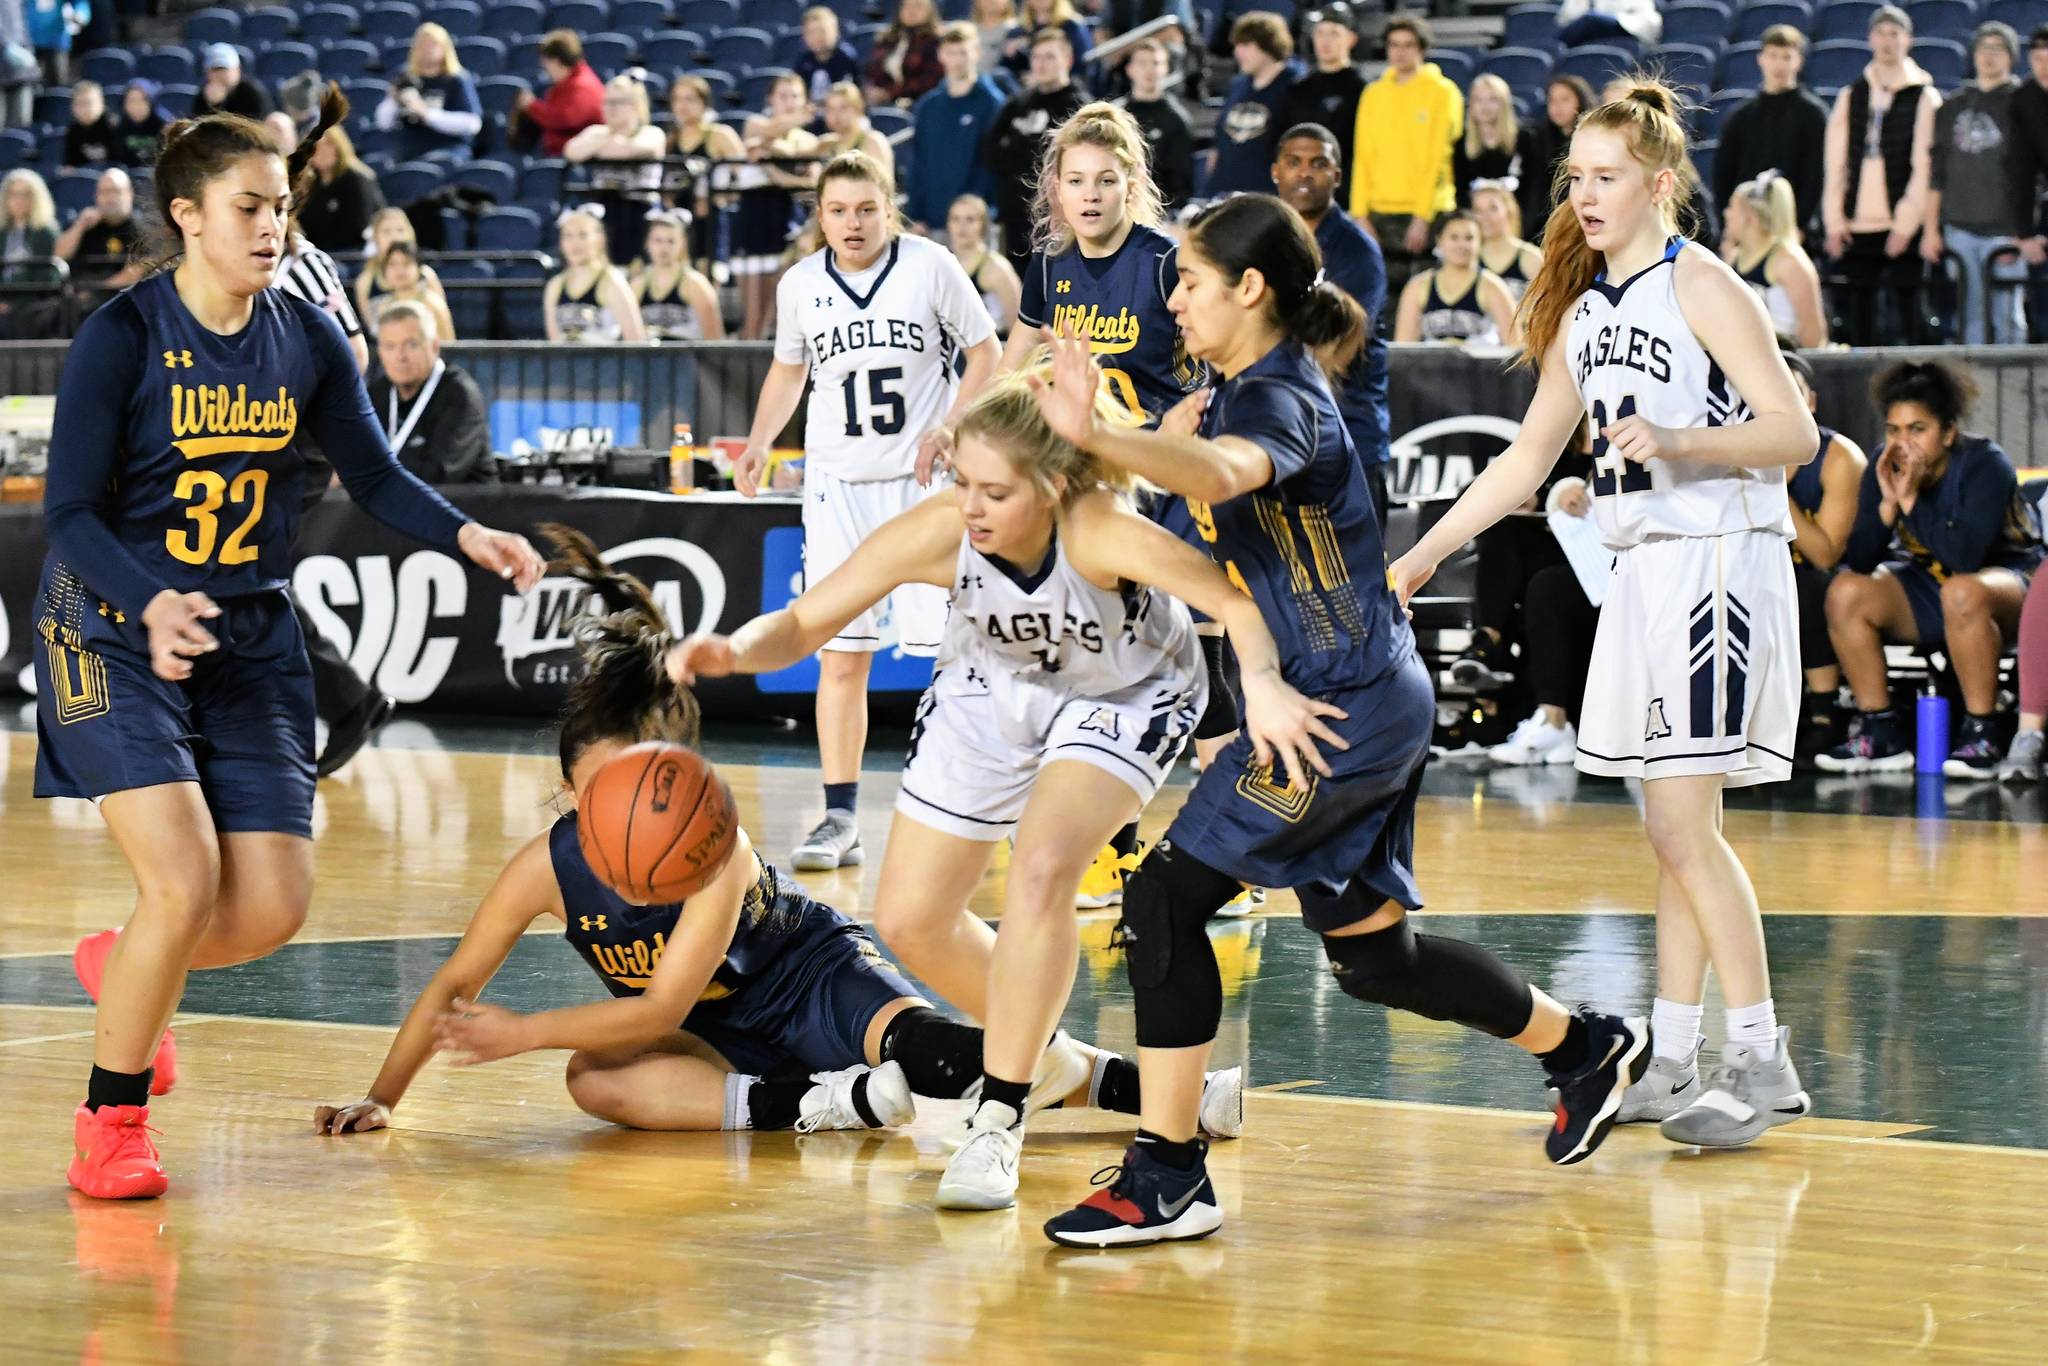 Despite ouster at state, some good news for Arlington girls basketball team